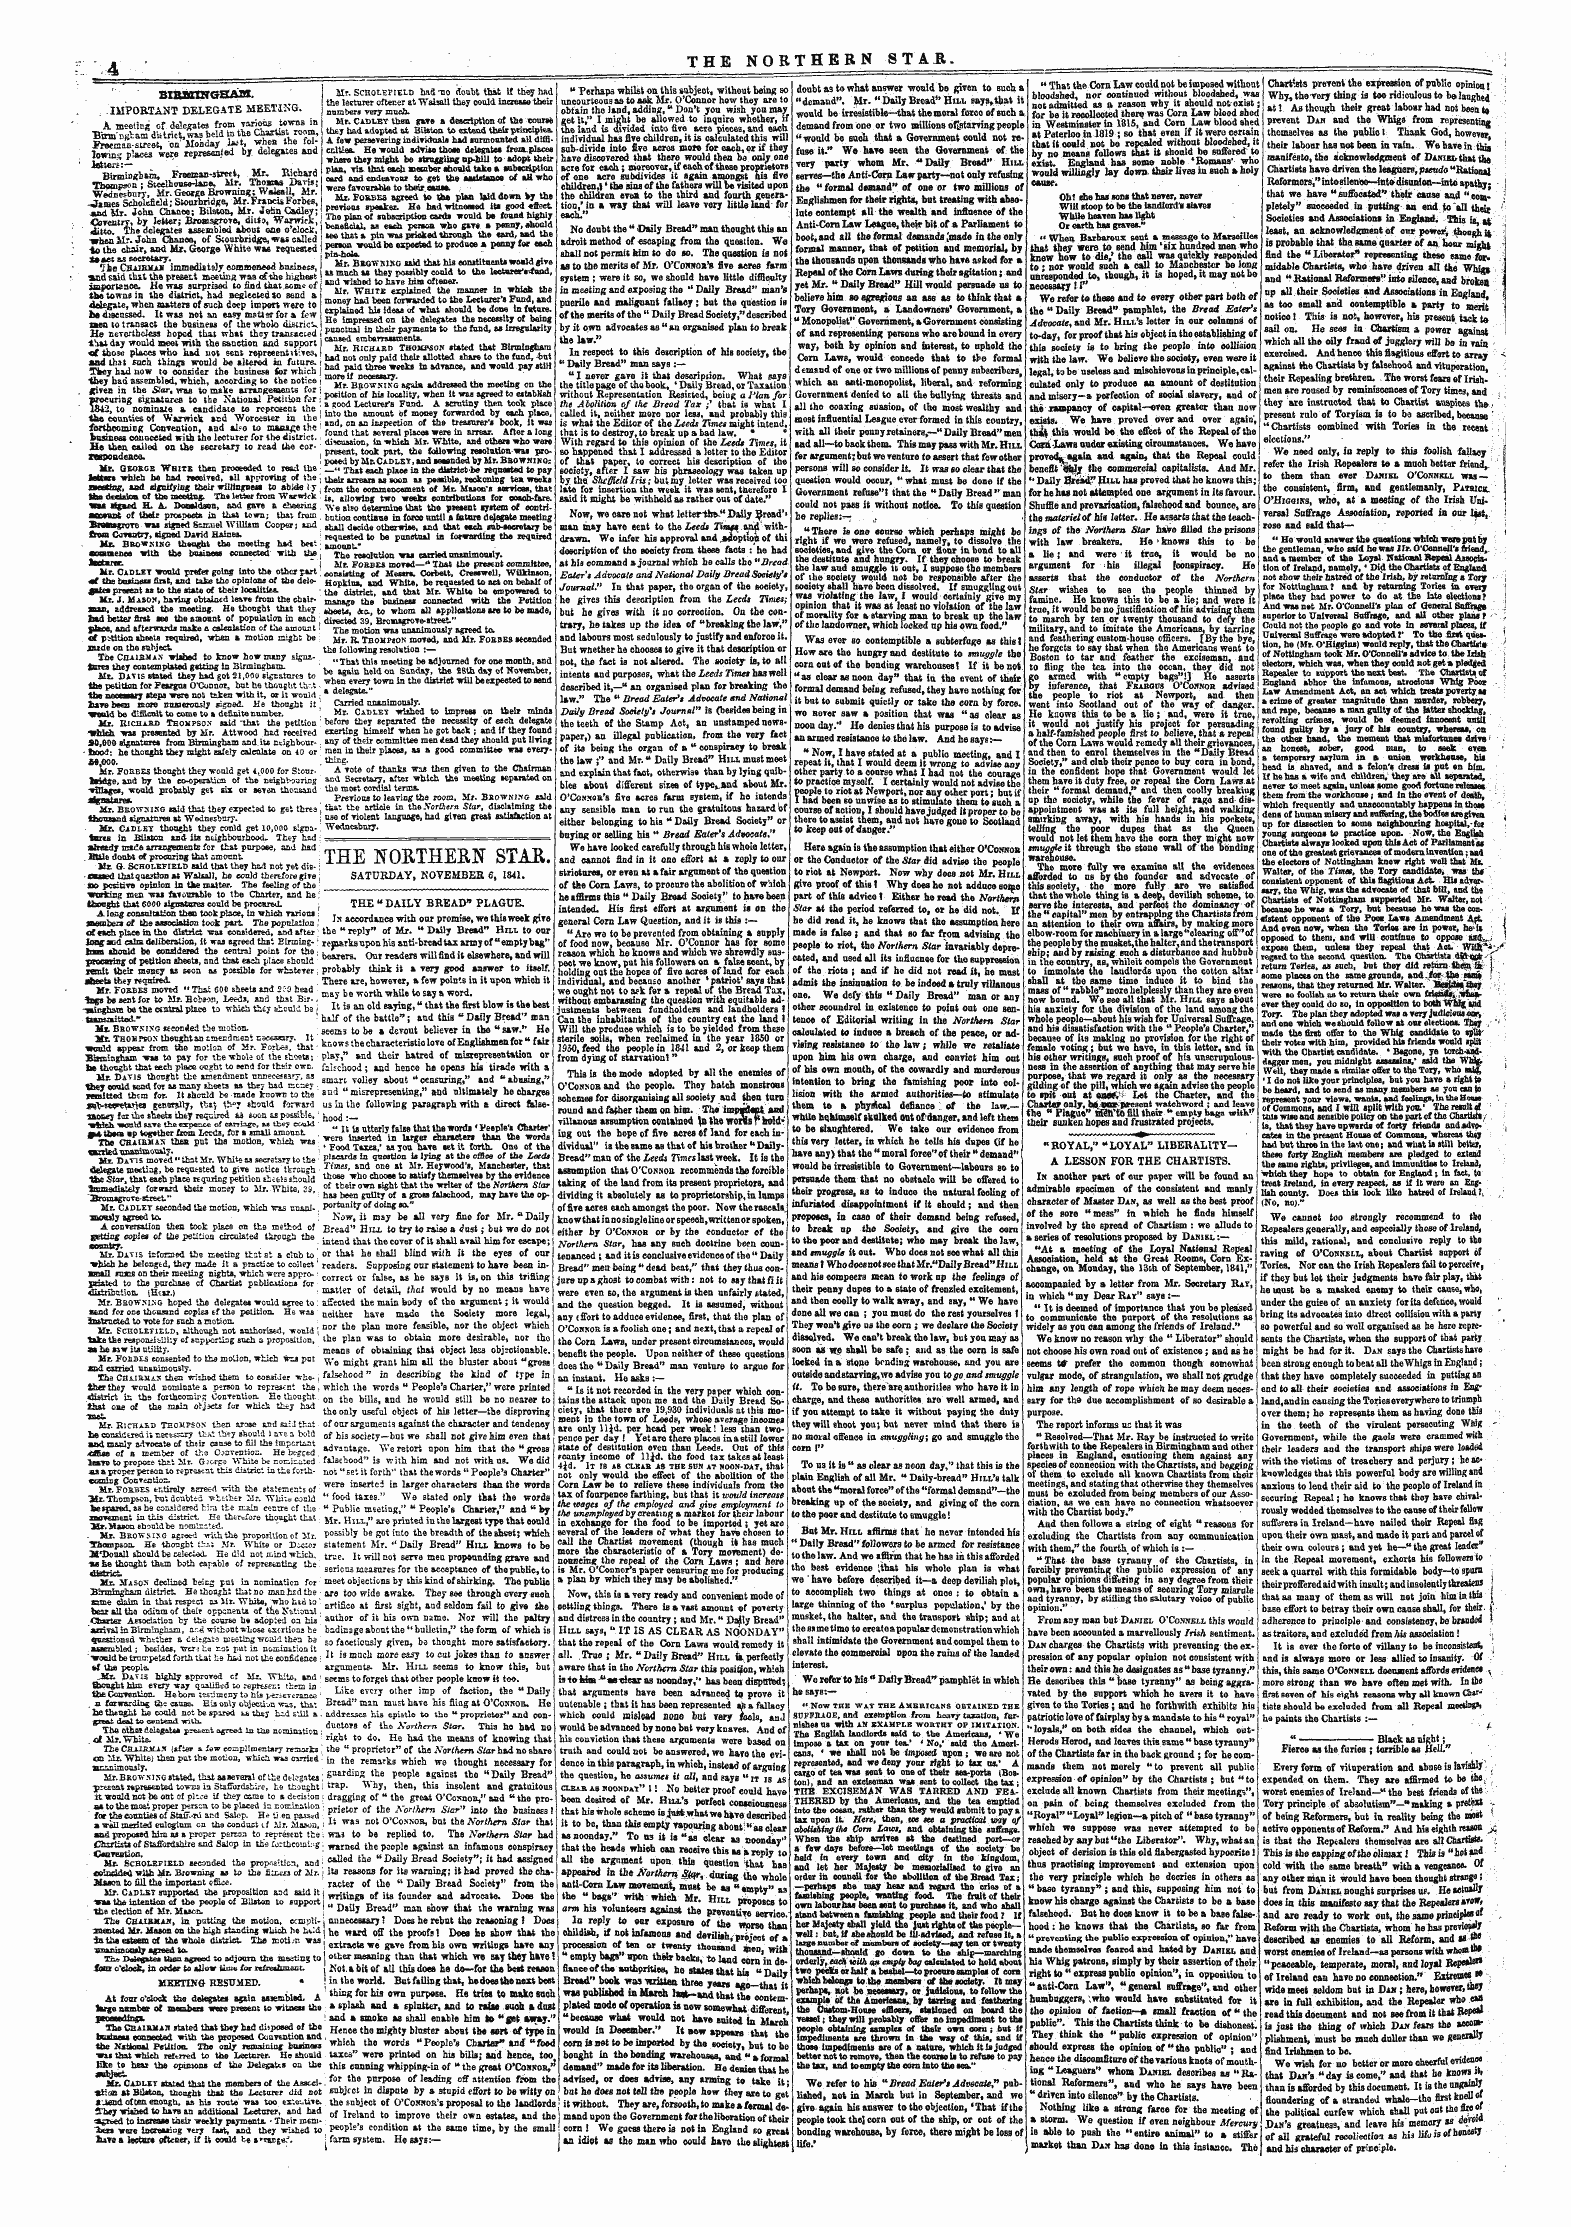 Northern Star (1837-1852): jS F Y, 4th edition - The Northern Star Saturday, November 6, 1841.